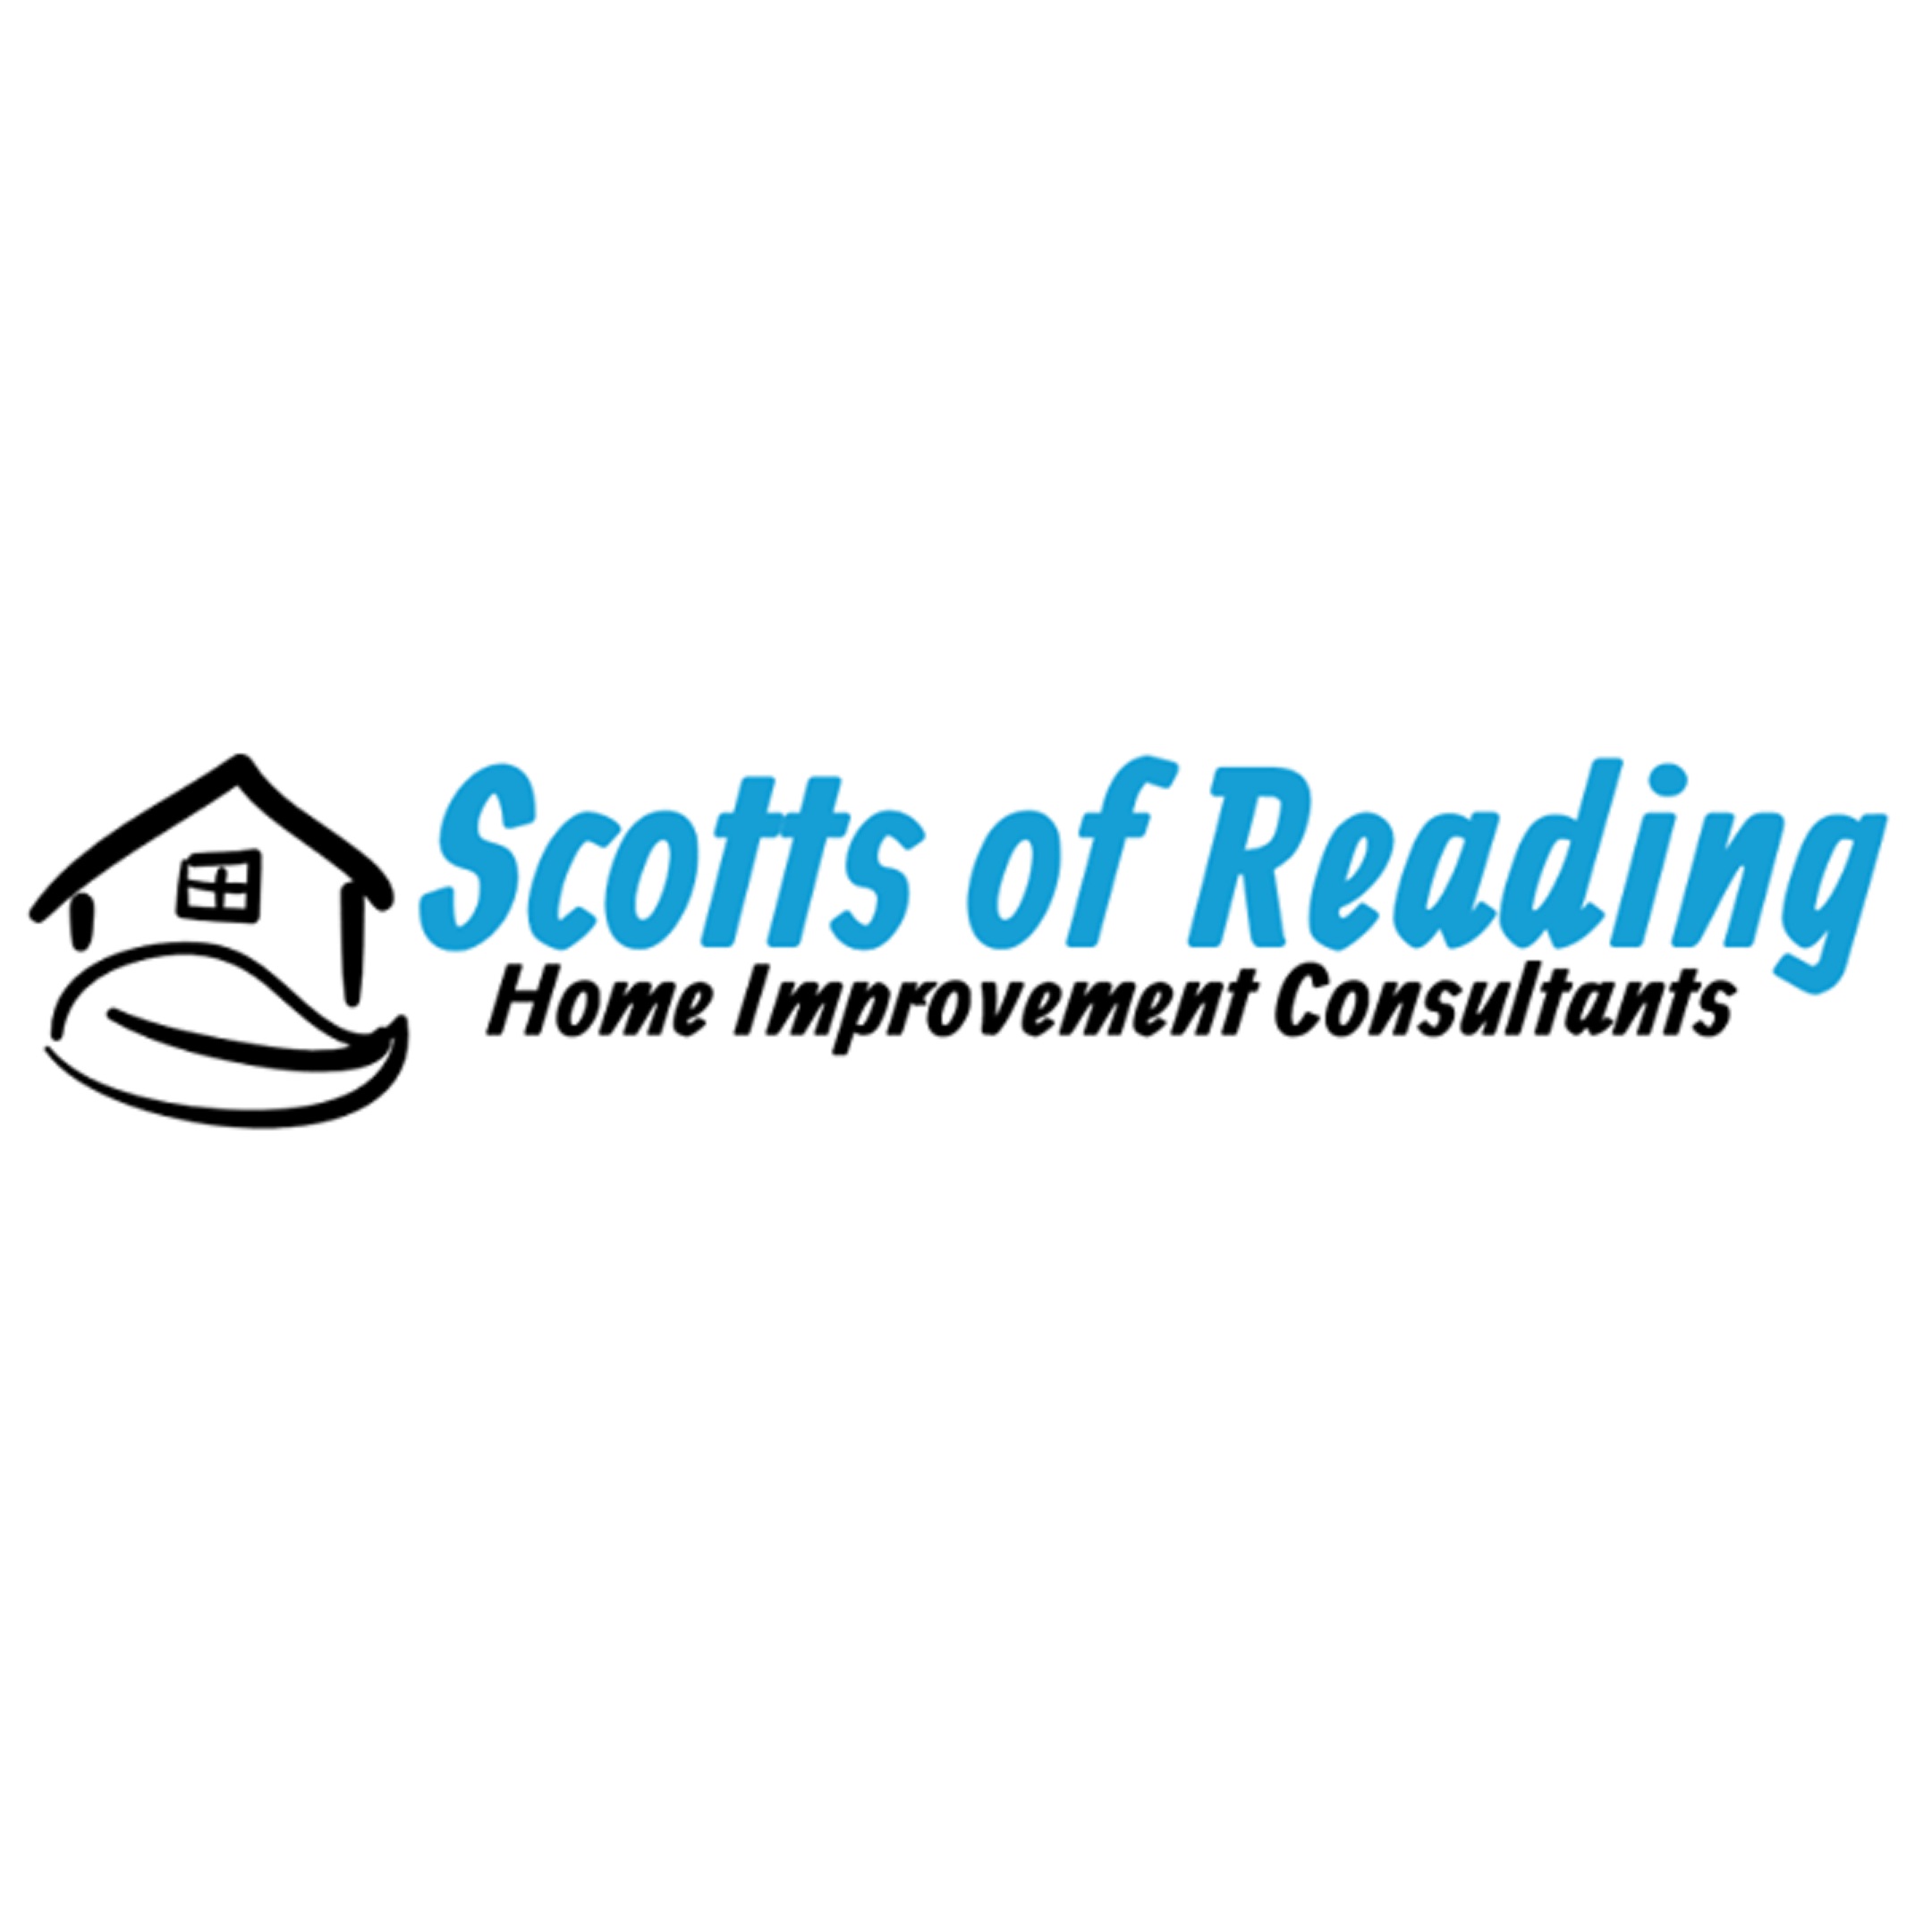 Scotts of Reading Ltd